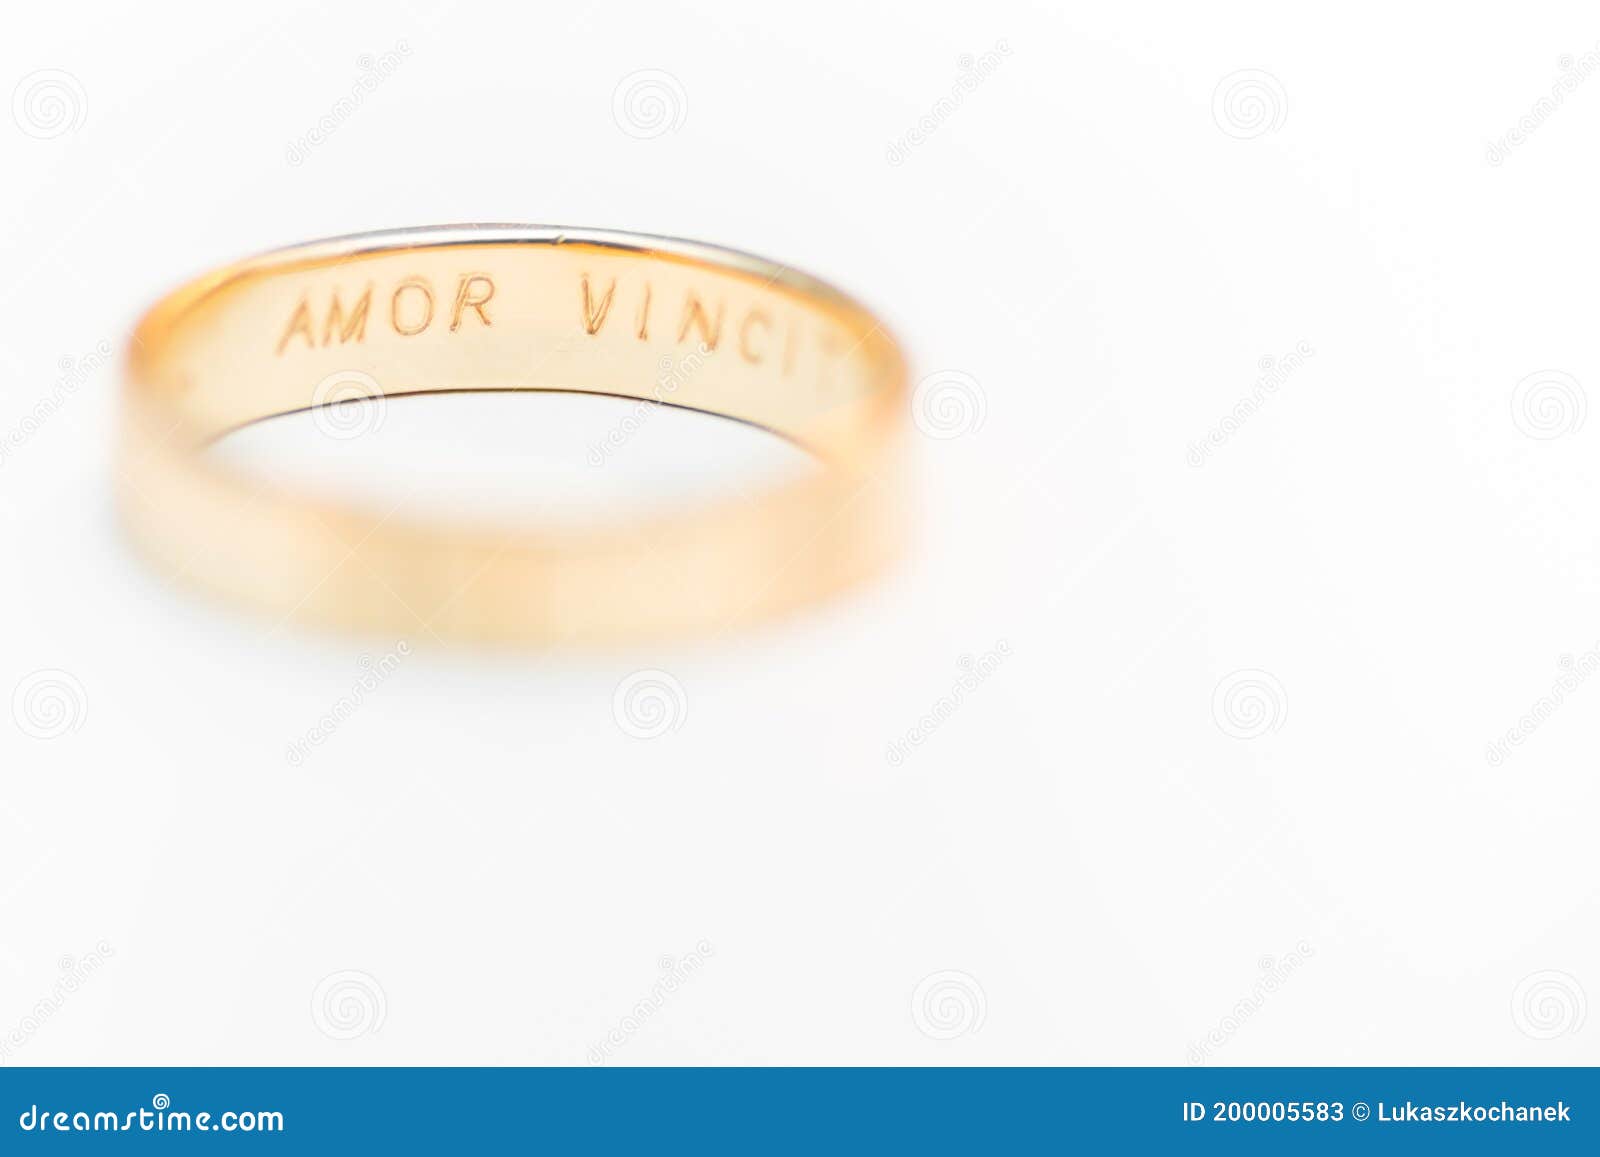 golden wedding ring  on white background - amor vincit omnia engraved